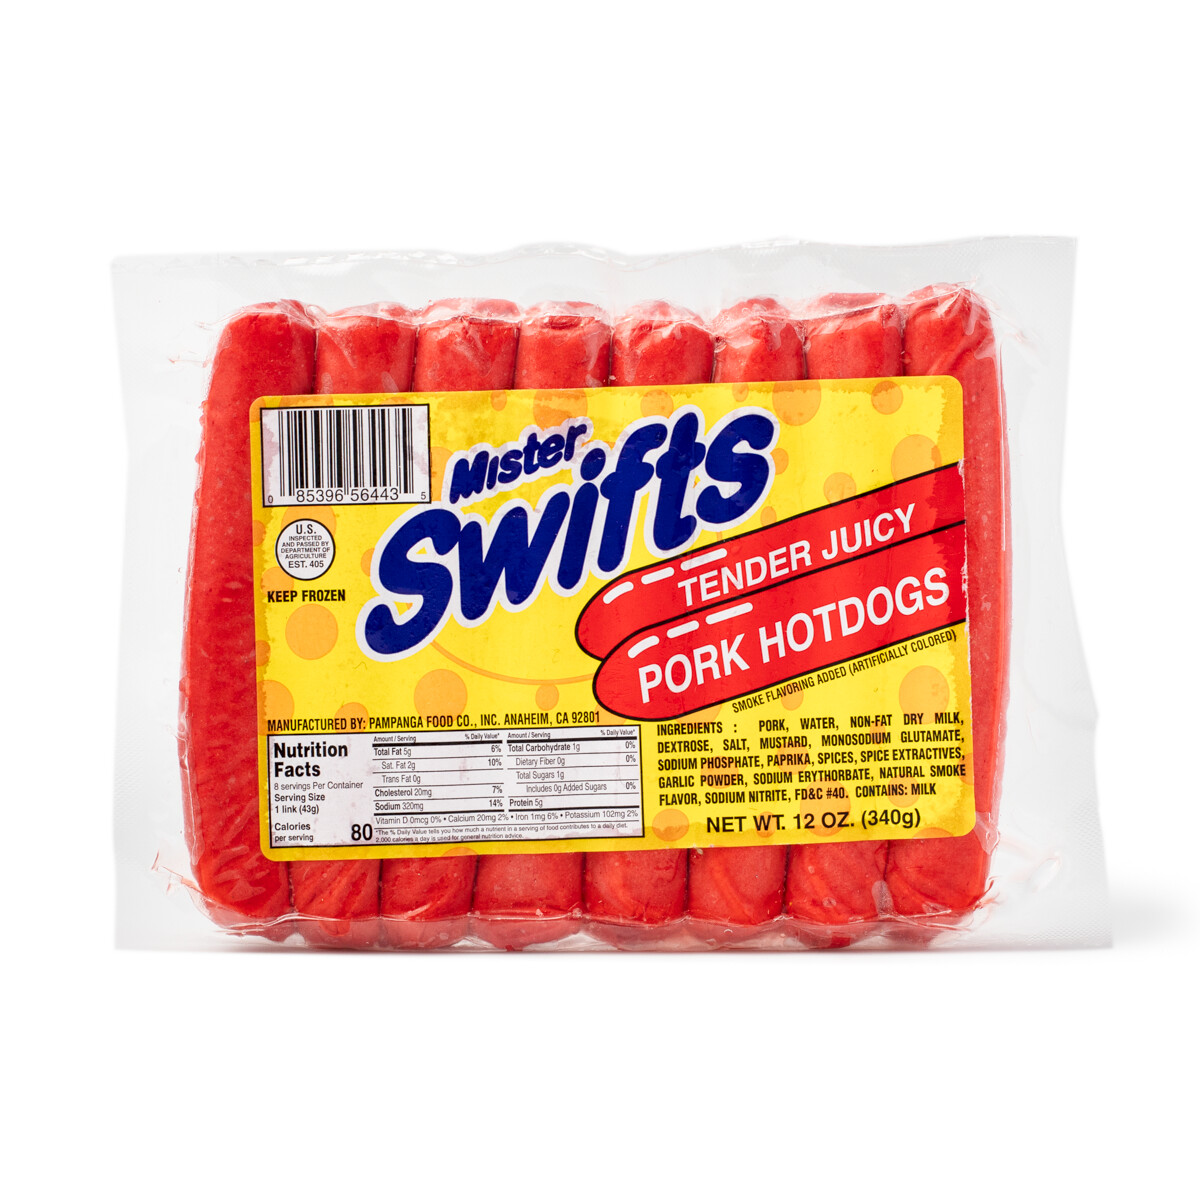 Mister Swifts Hot dog (tender juicy)